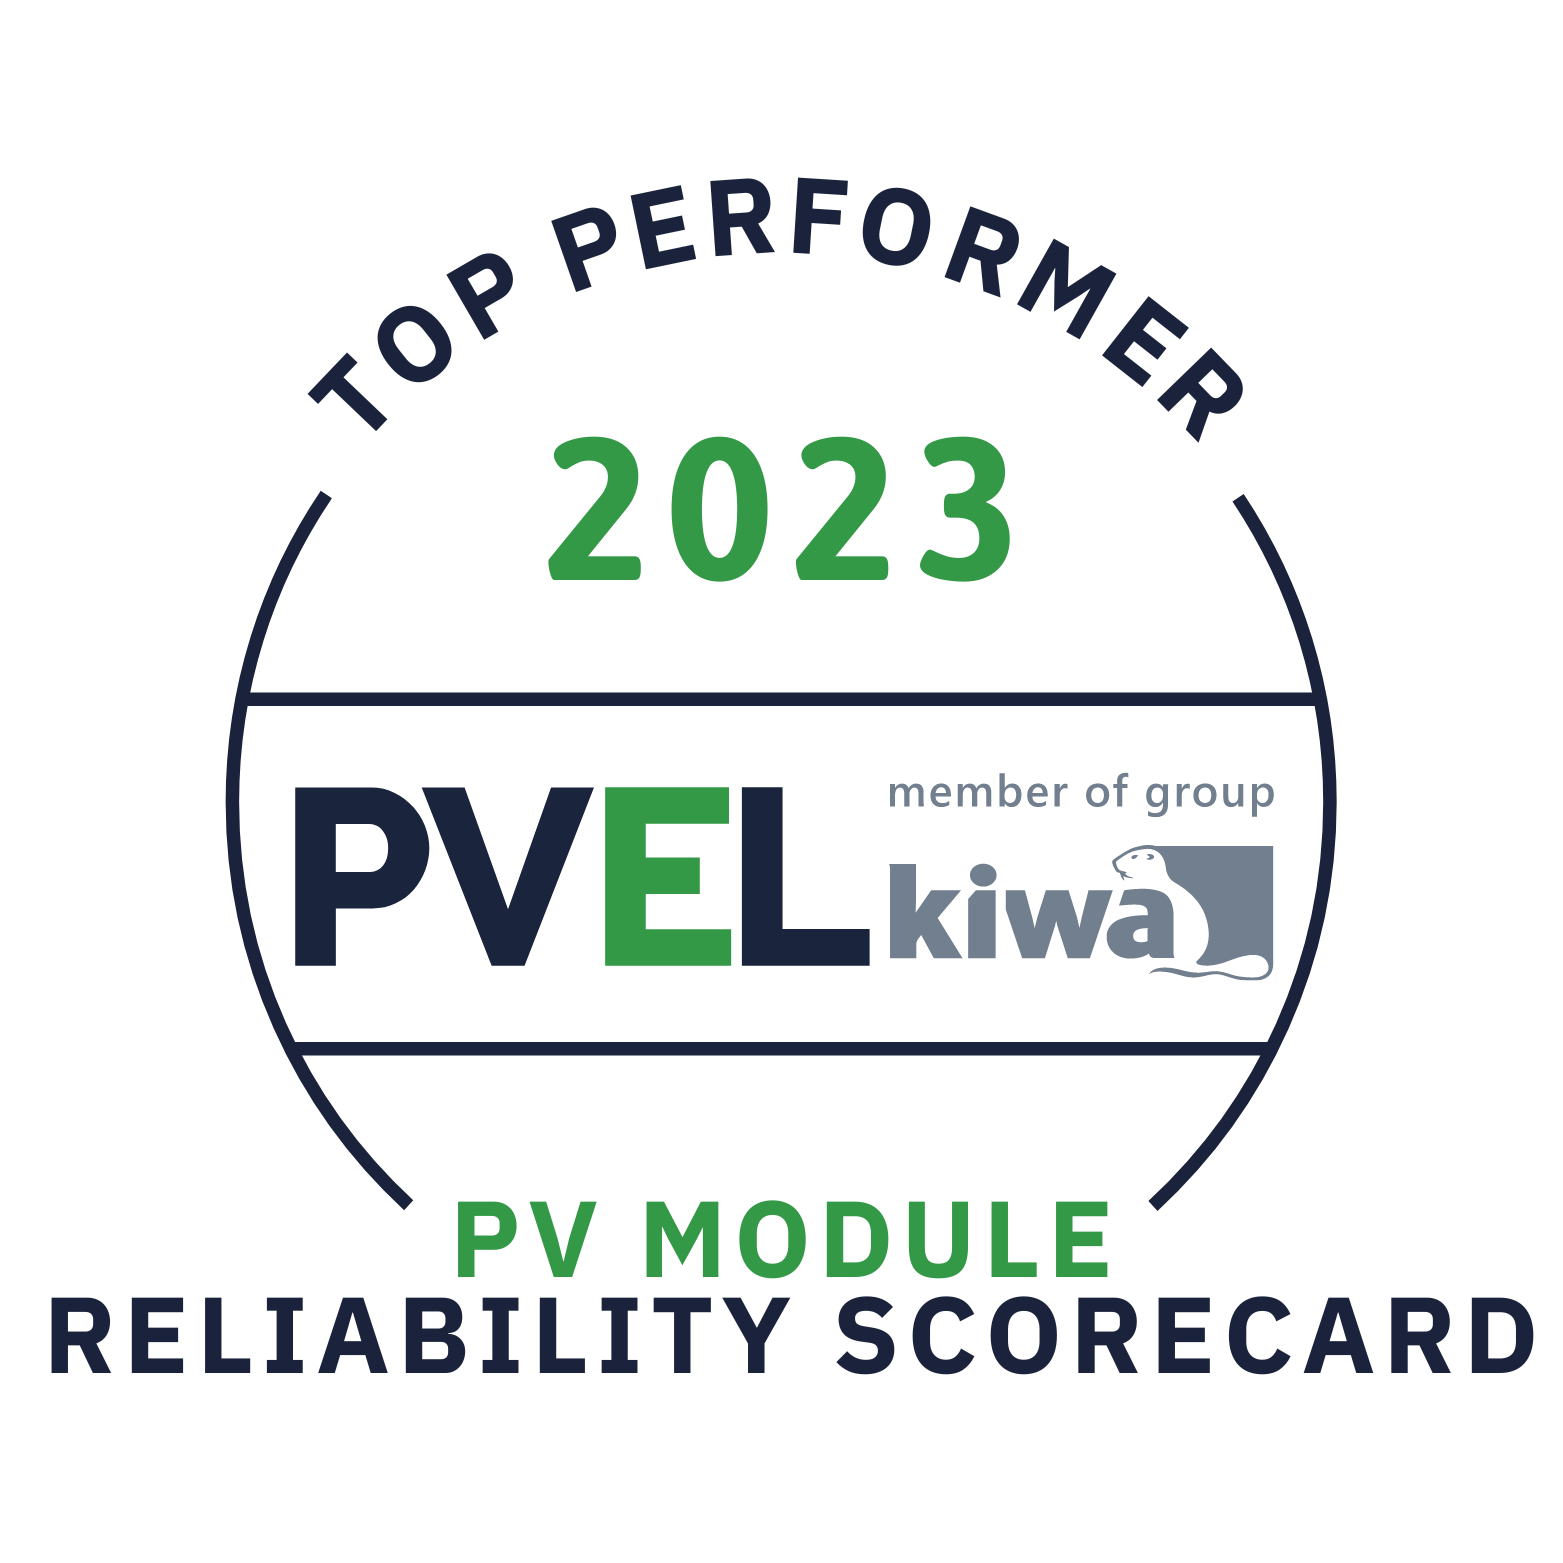 Pvel 2023 Top Performer Mark